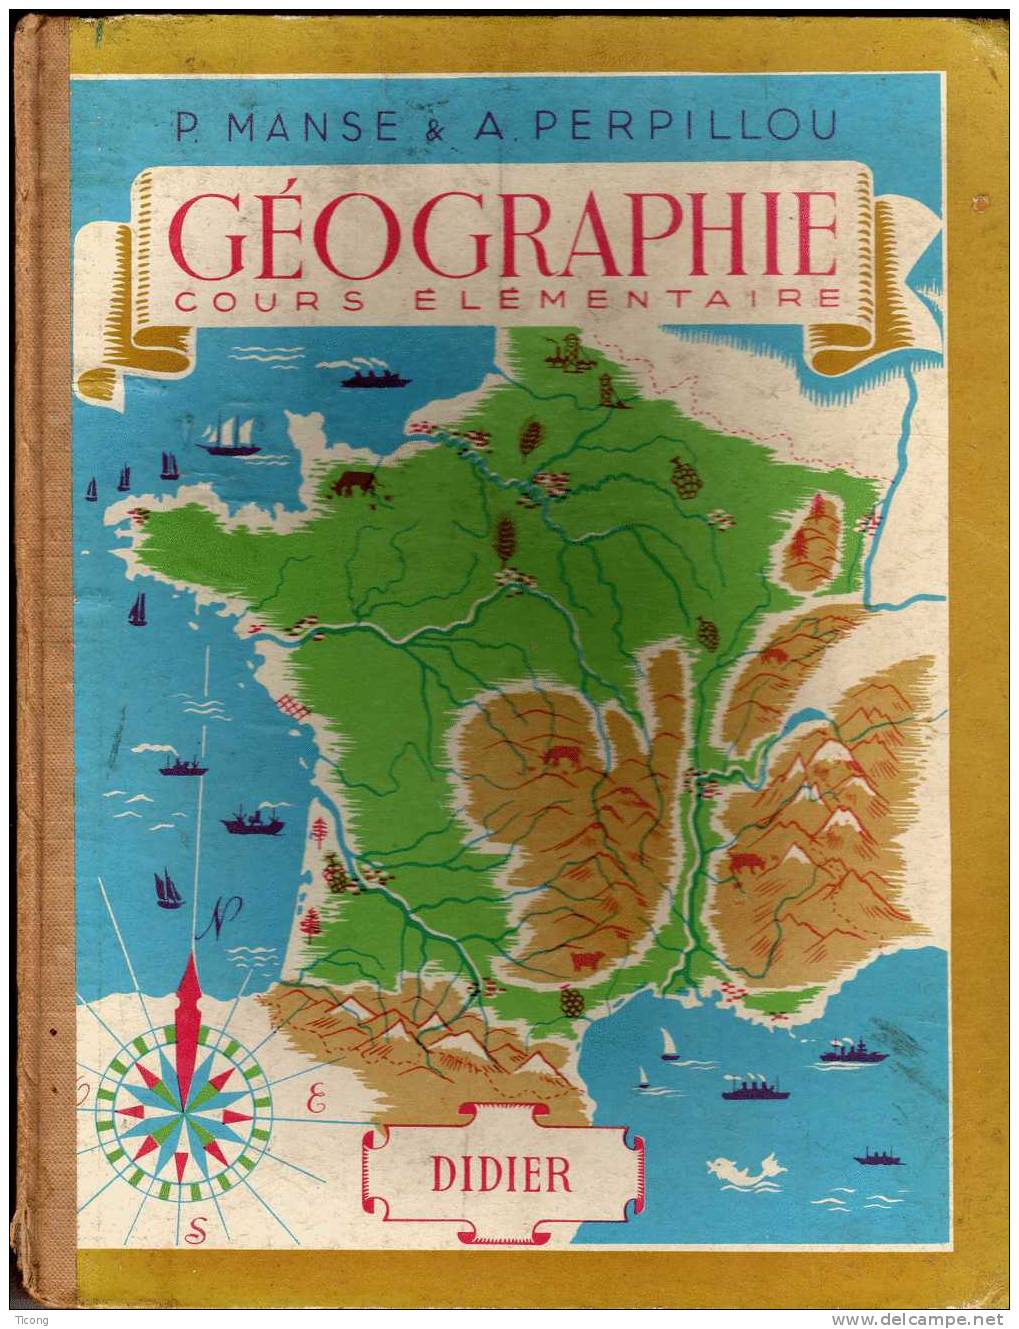 GEOGRAPHIE COURS ELEMENTAIRE MANSE ET PERPILLOU - EDITION DIDIER PARIS 1957 - 6-12 Years Old